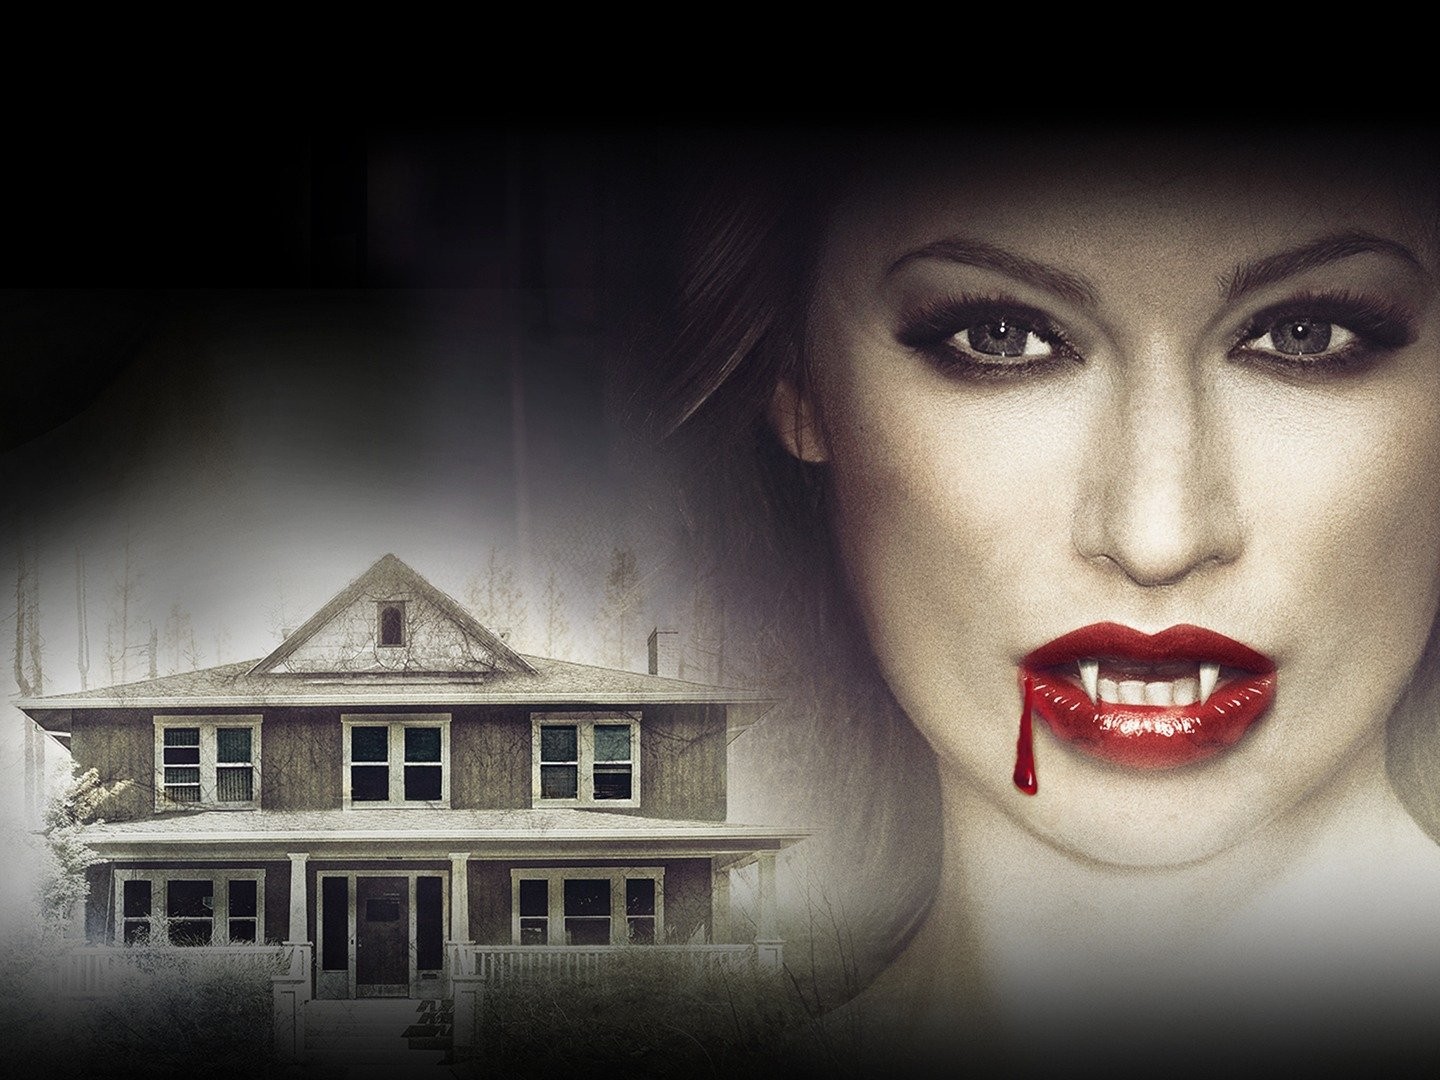 Living Among Us': Assista ao trailer do terror found footage sobre Vampiros  - CinePOP